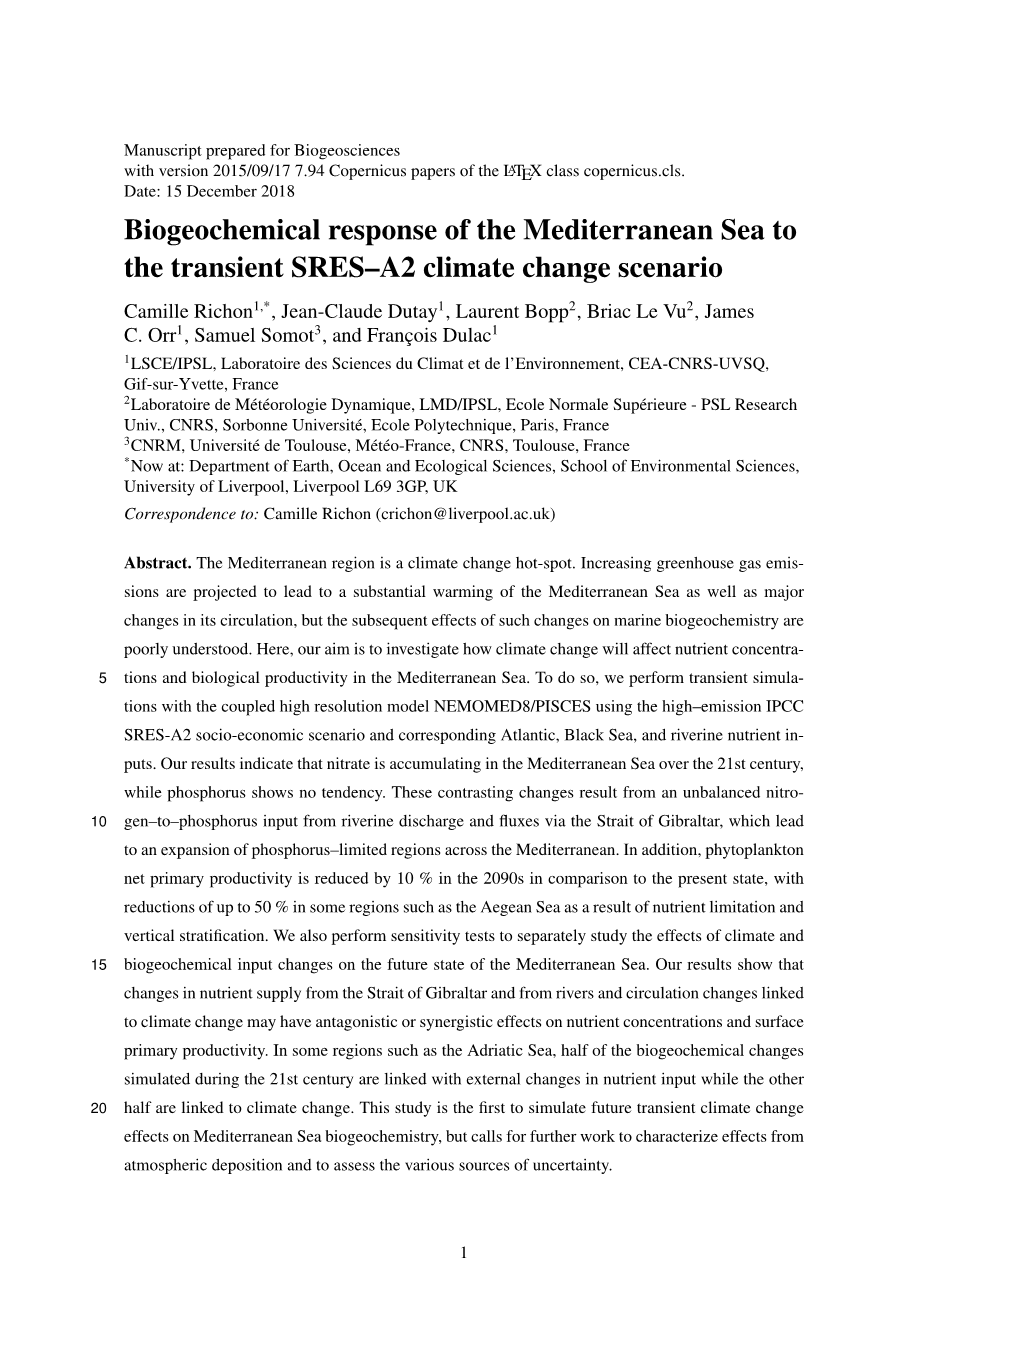 Biogeochemical Response of the Mediterranean Sea to the Transient